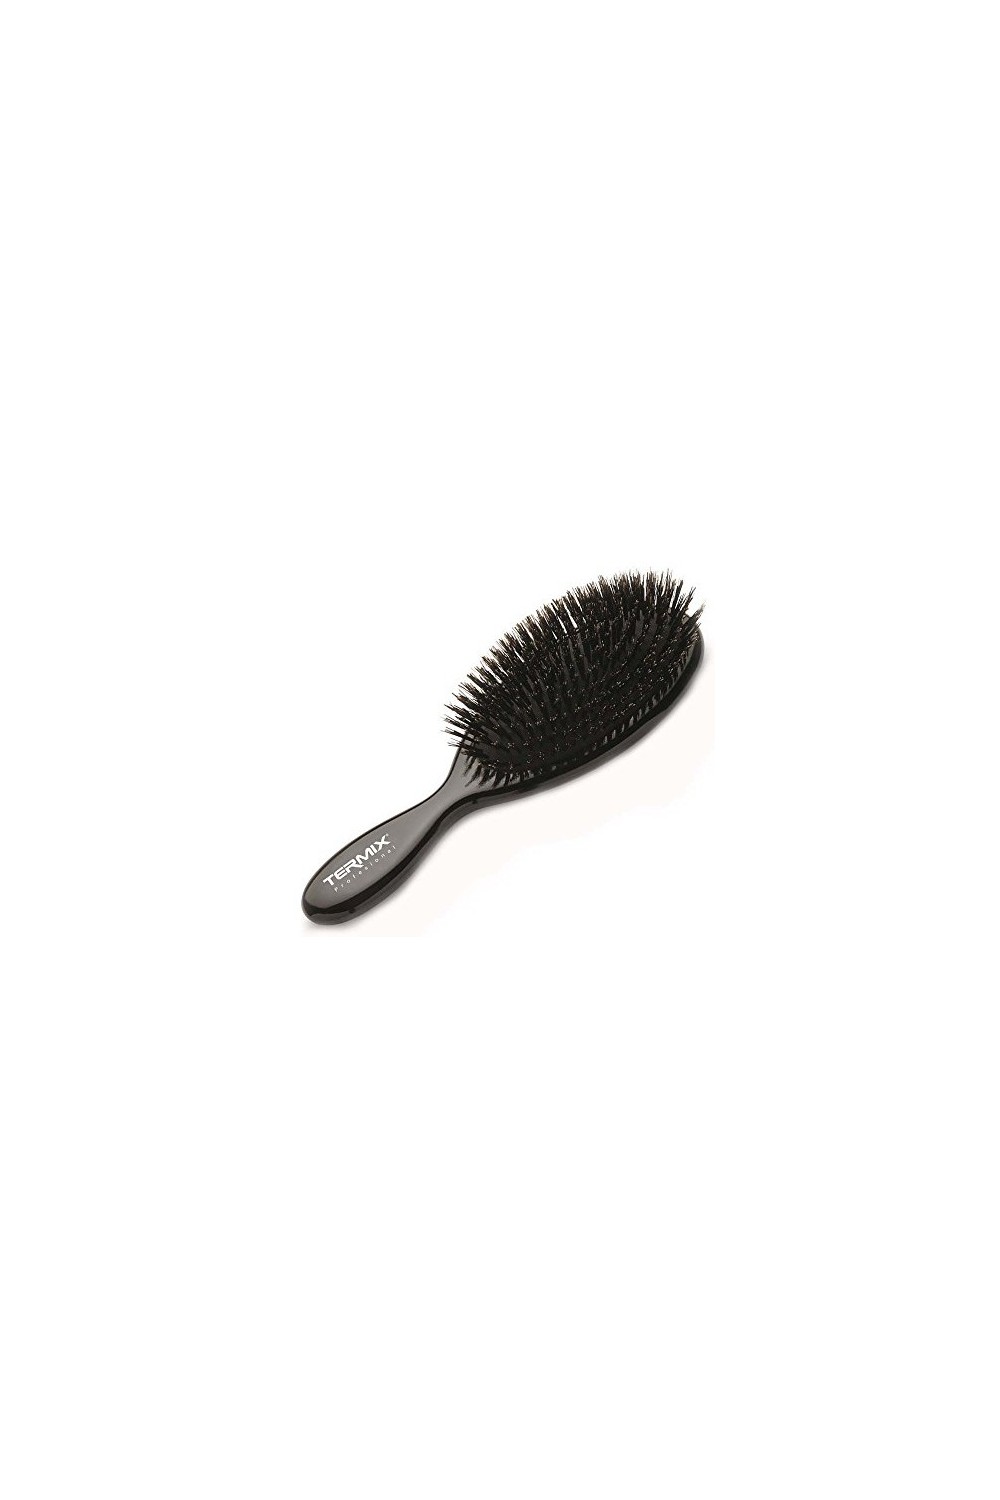 Termix Small Natural Boar Hairbrush